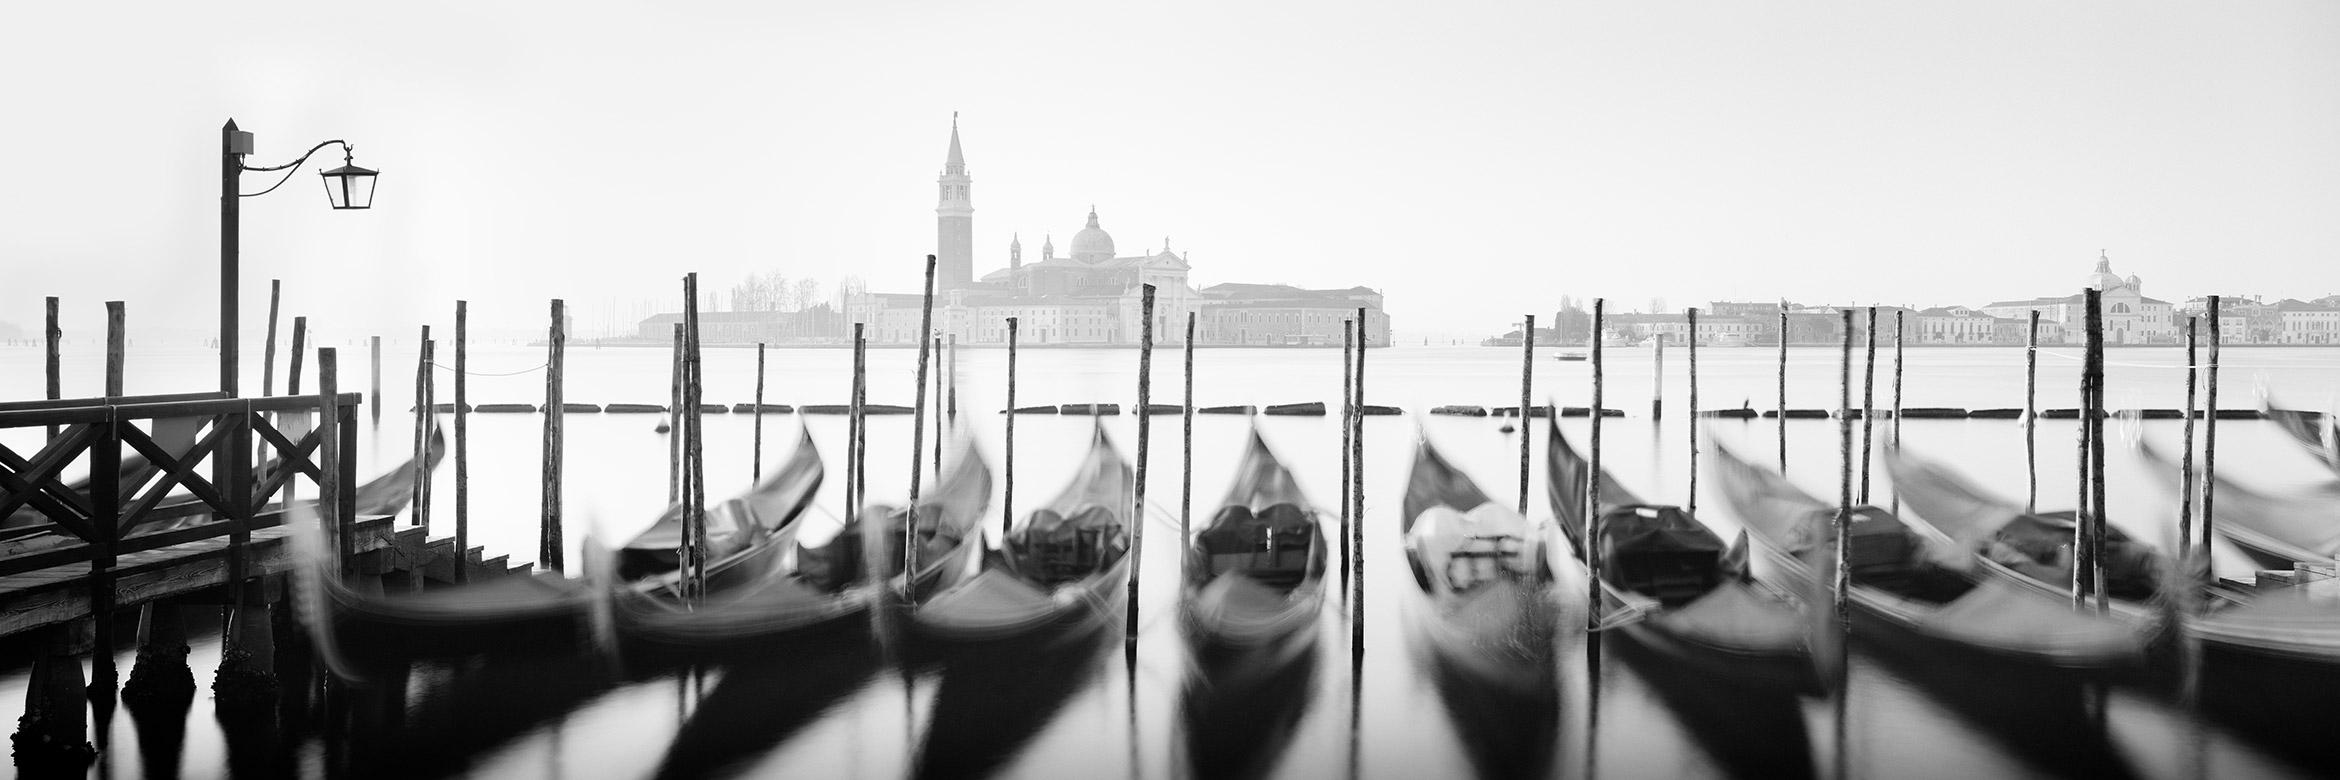 Gerald Berghammer Landscape Photograph - Twelve Gondolas, Venice, Italy, black and white fine art cityscape photography